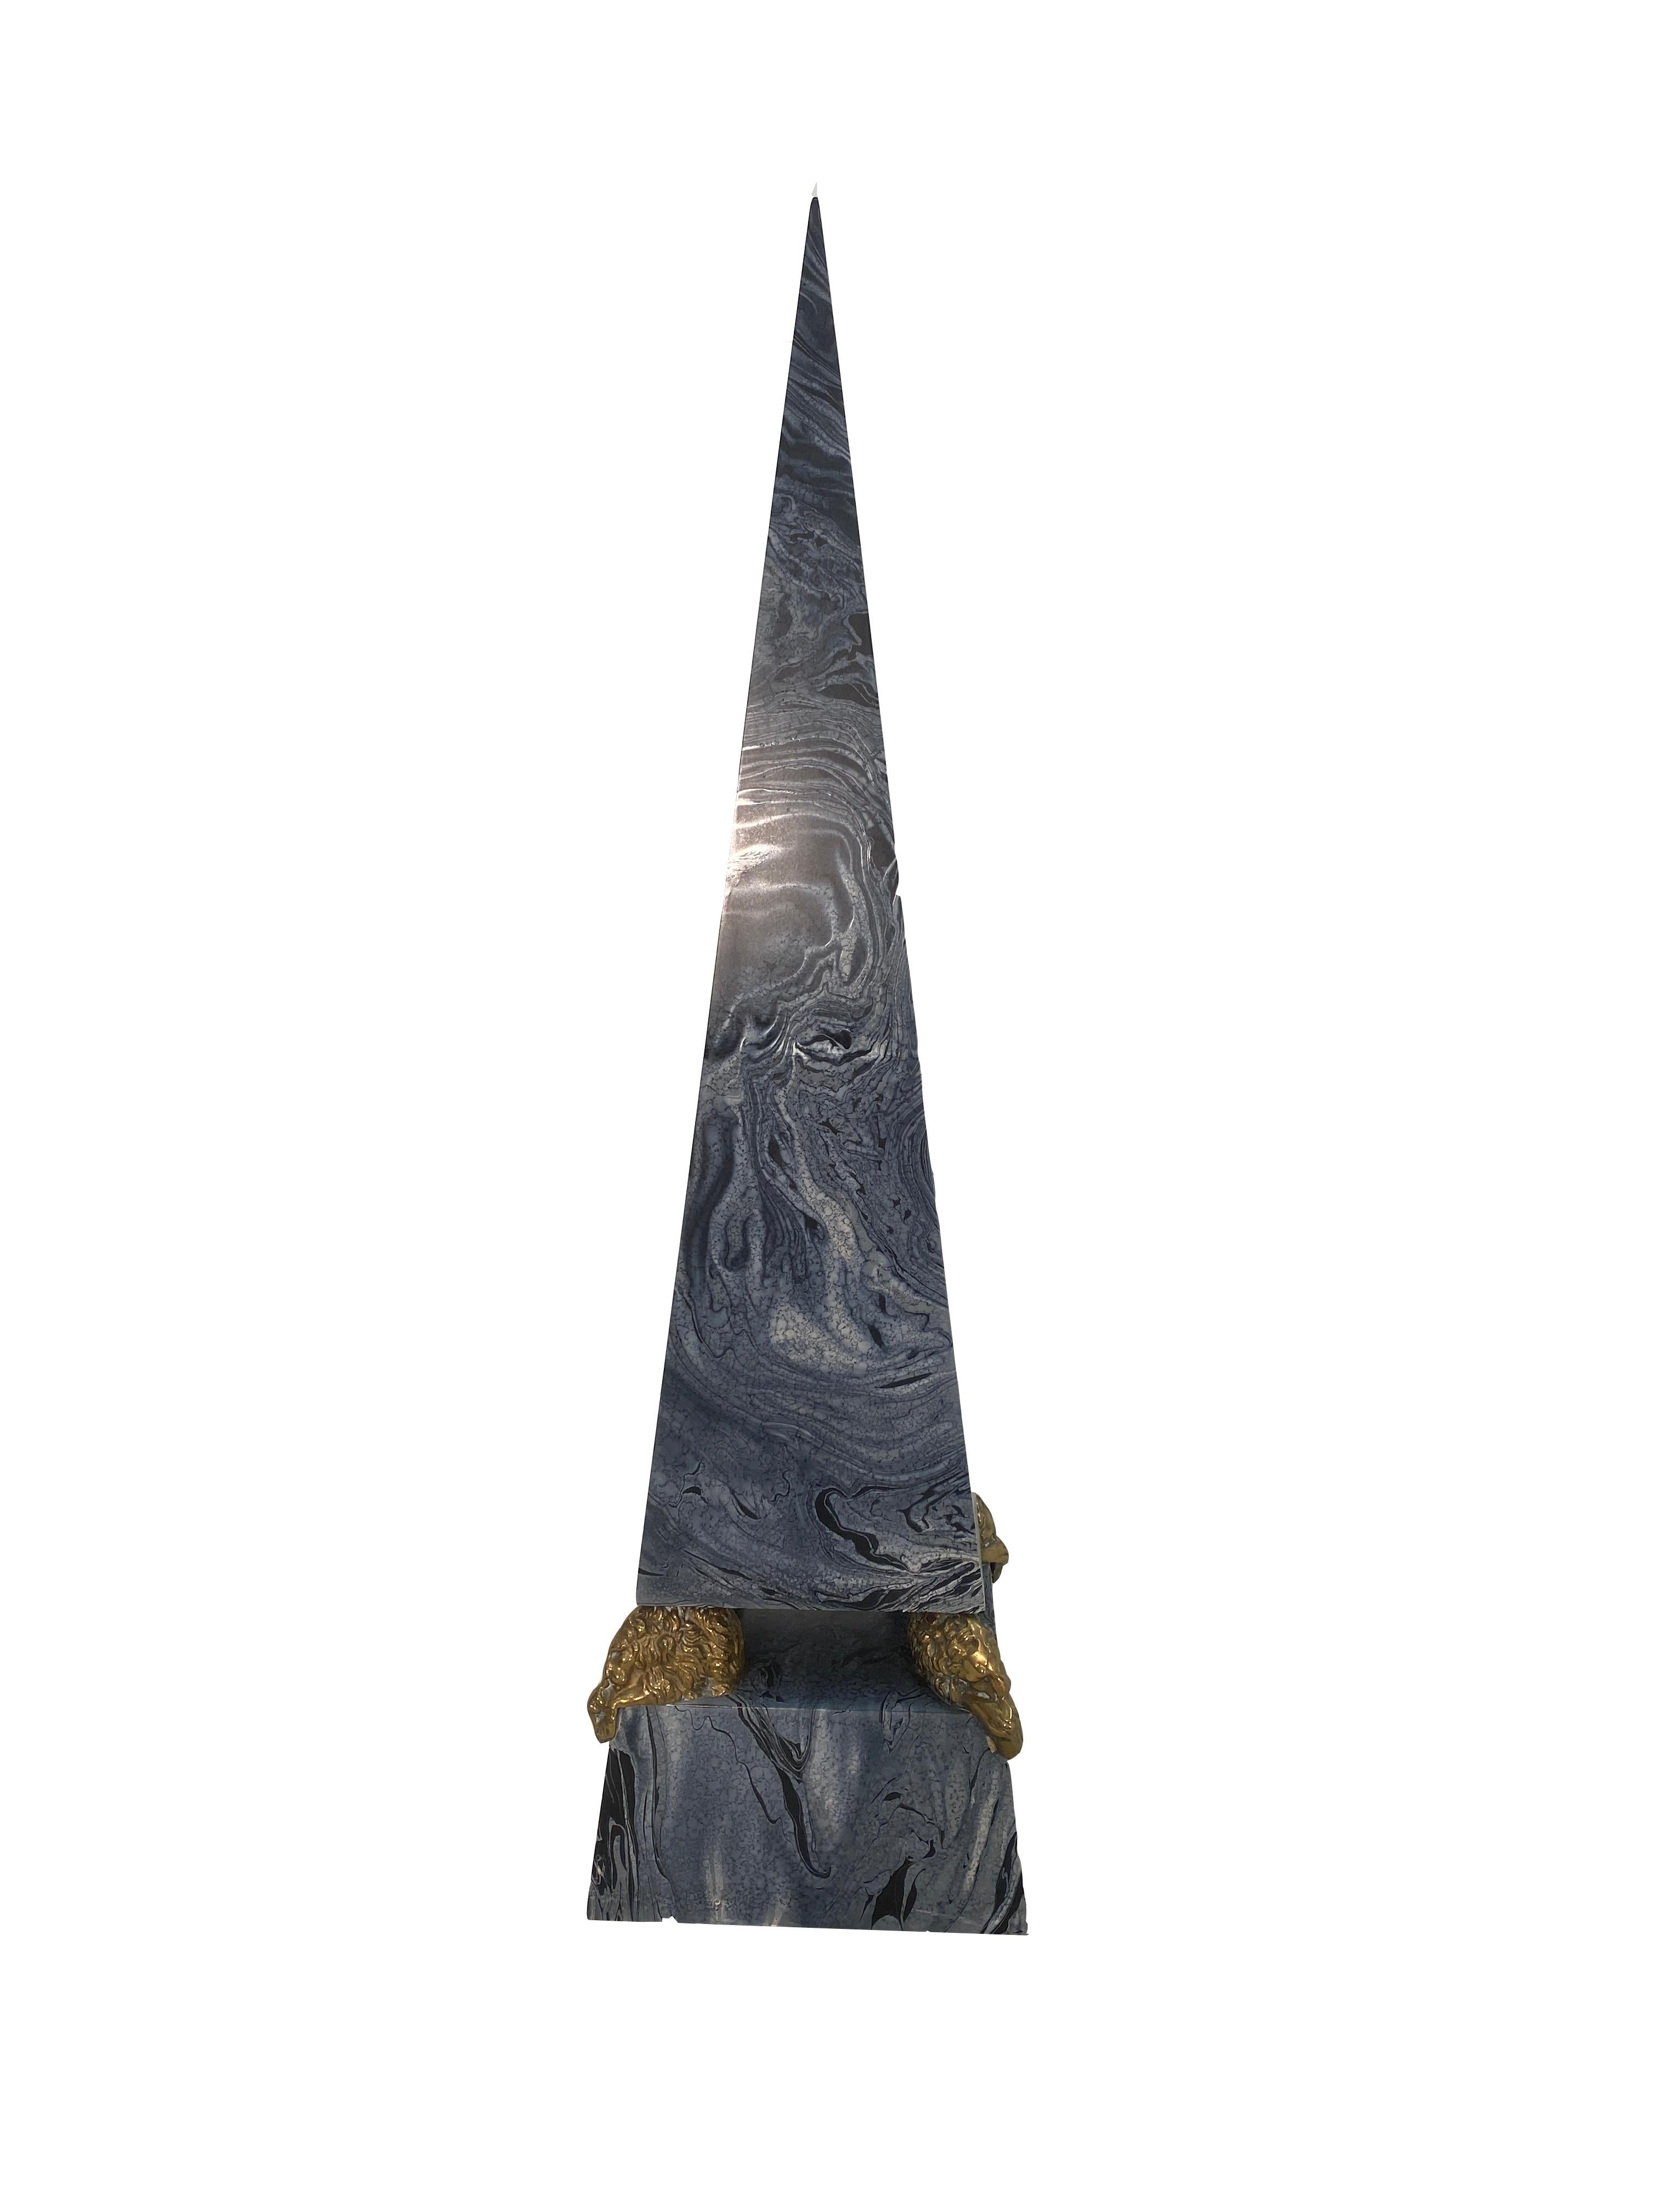 American Monumental Hollywood Regency Style Faux Marble Obelisk For Sale